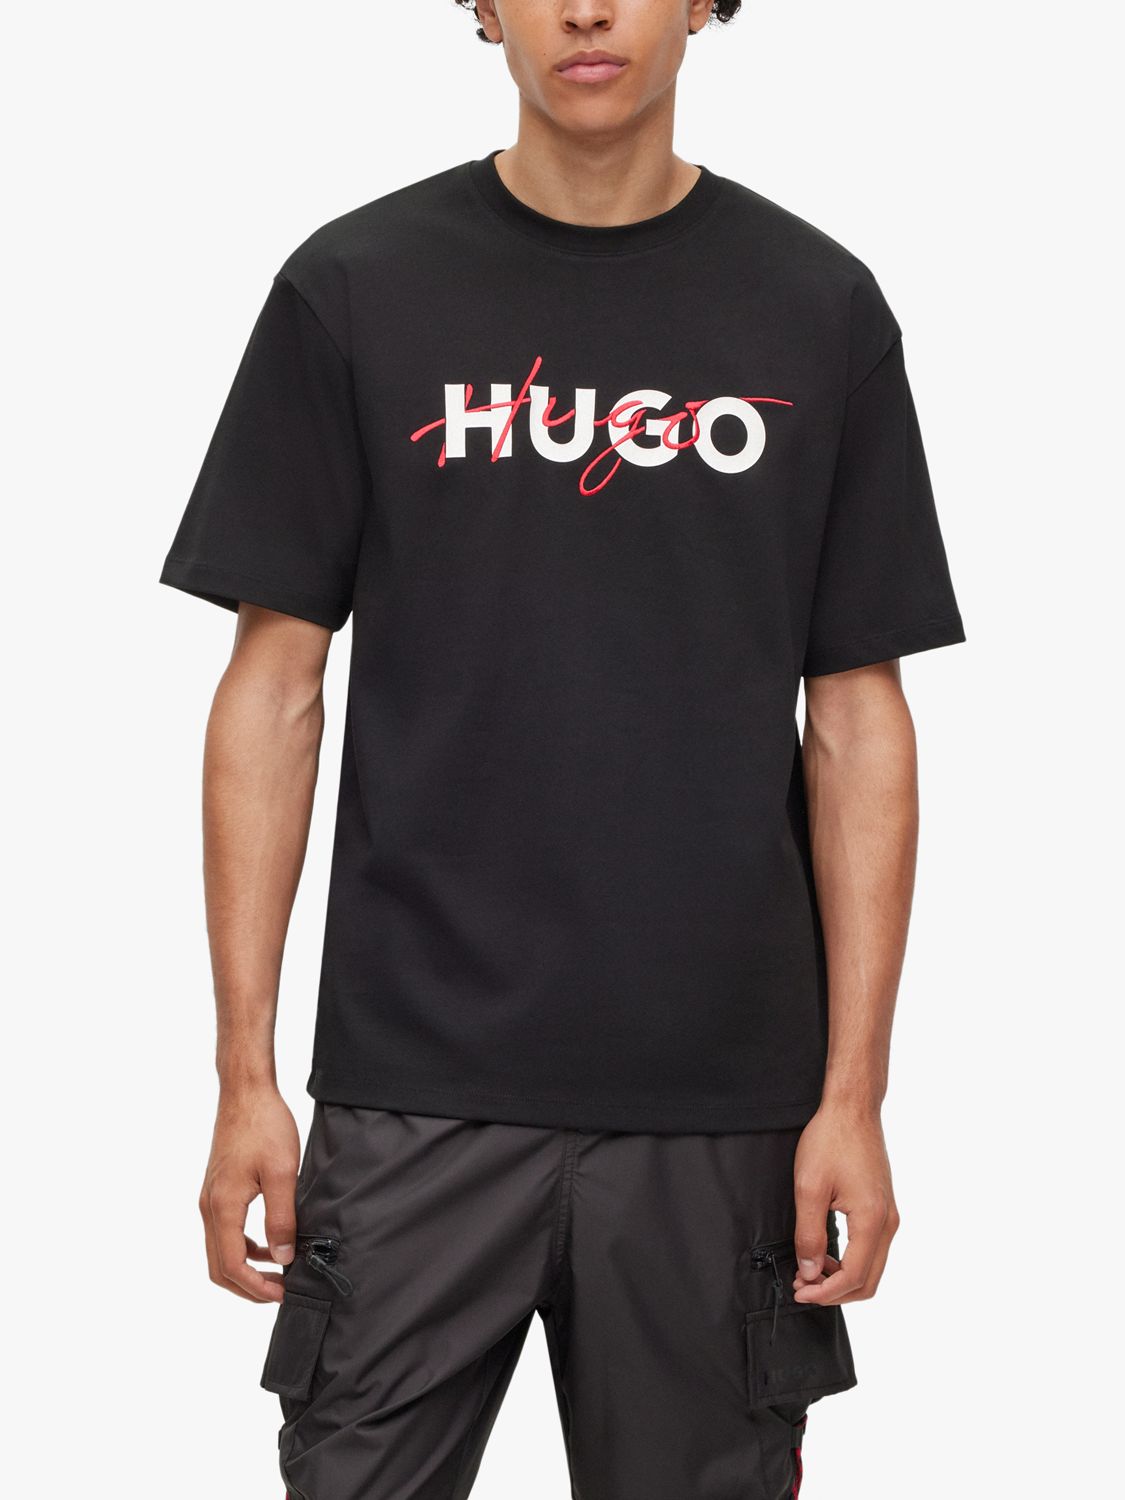 HUGO Dakaishi Crew Neck T-Shirt, Black at John Lewis & Partners